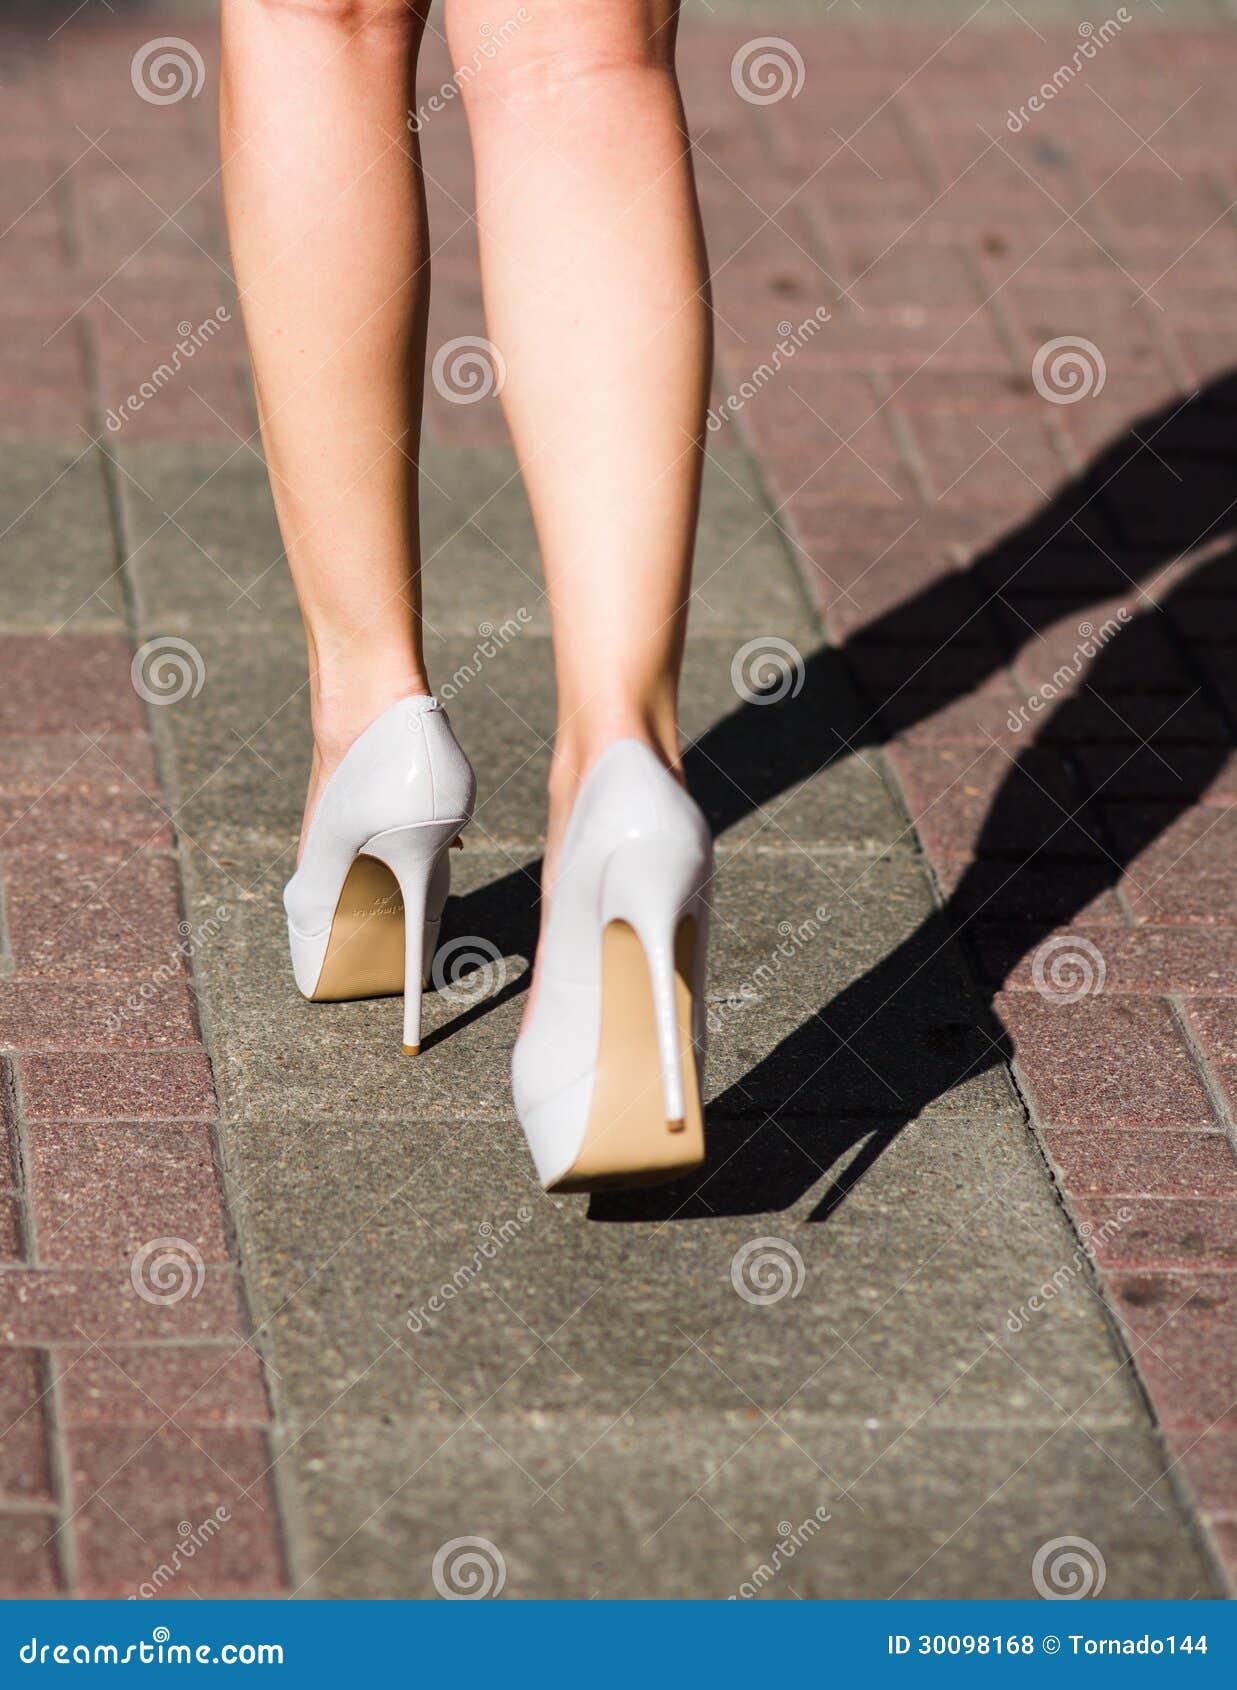 Pin by Etienne Oldeman on special heels | Extreme high heels, High heels  images, Stiletto heels legs